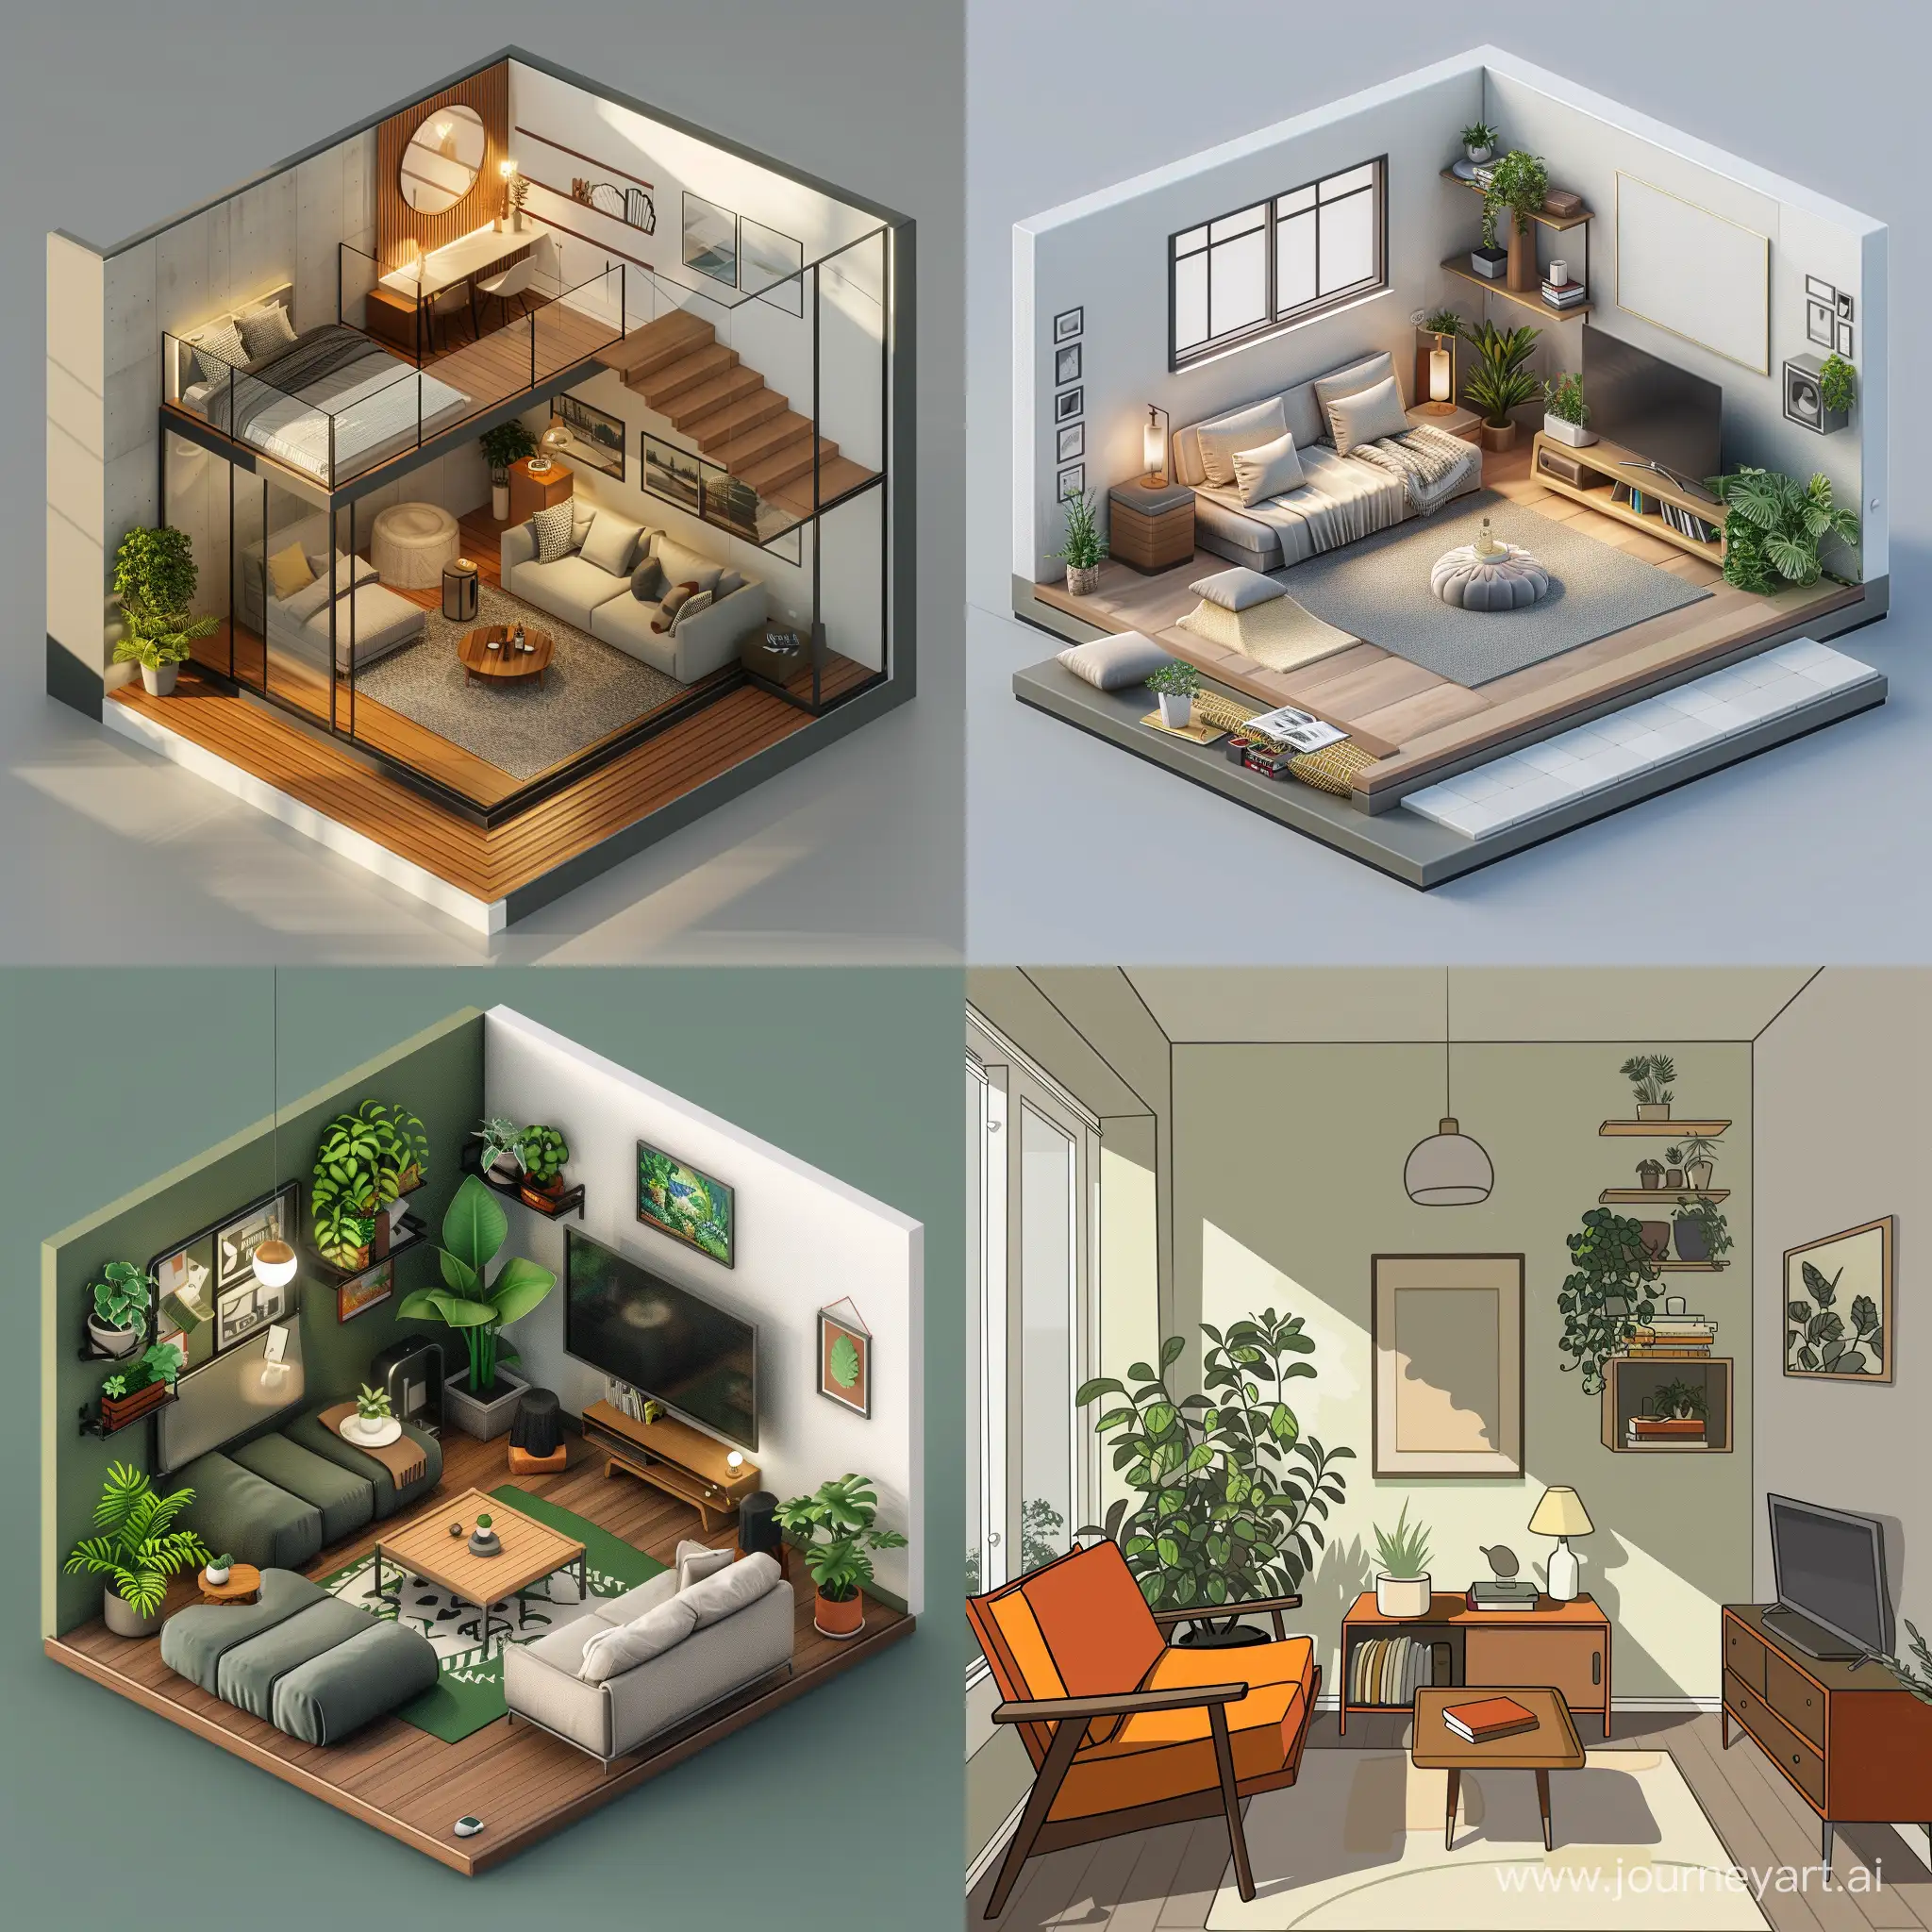 Spacious-and-Cozy-Room-Interior-Design-in-Figma